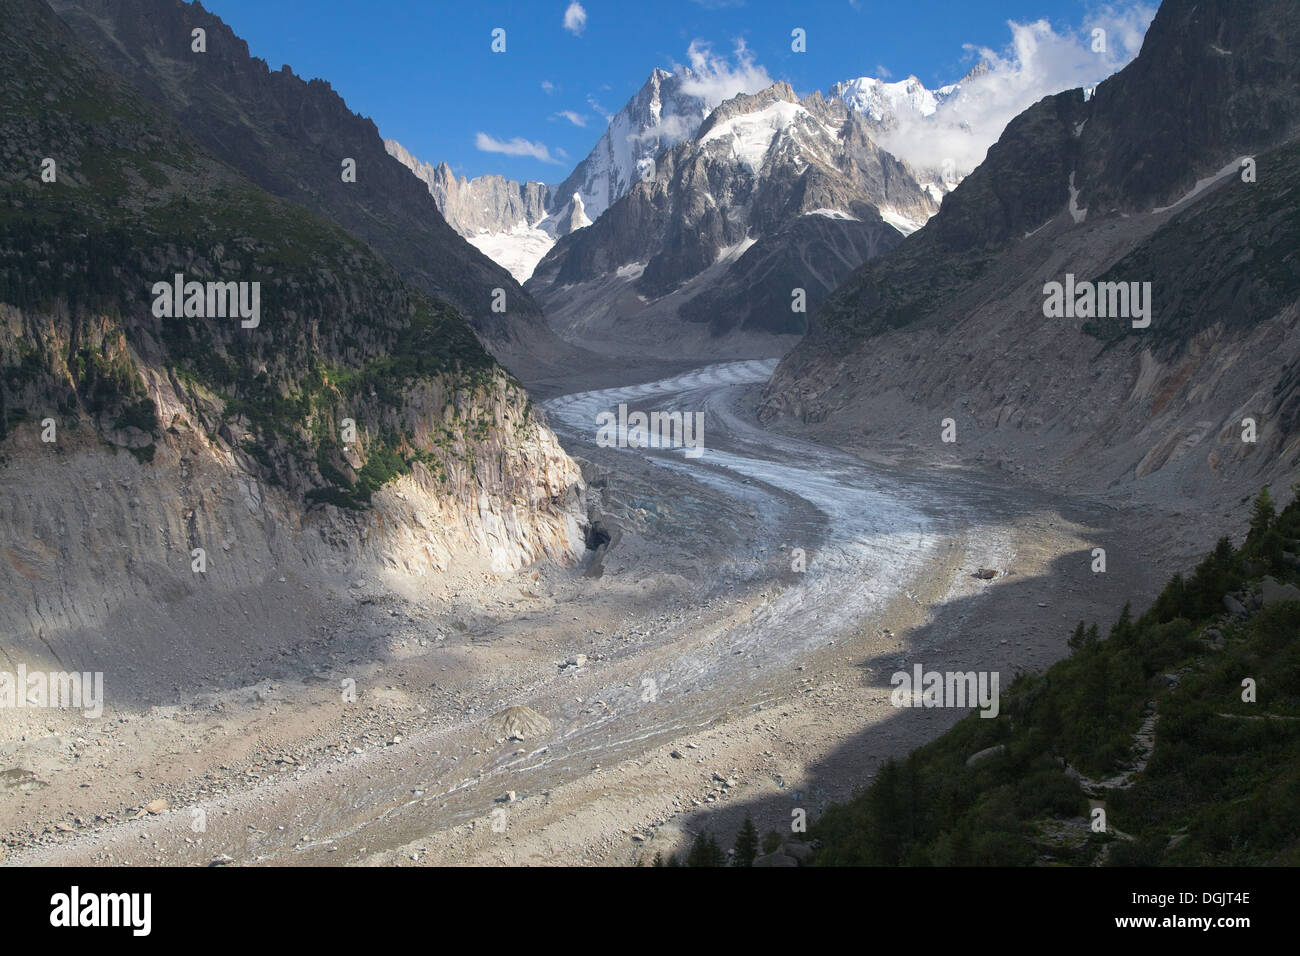 Glacier Mer de Glace from Montenvers, Chamonix-Mont-Blanc, France. Stock Photo